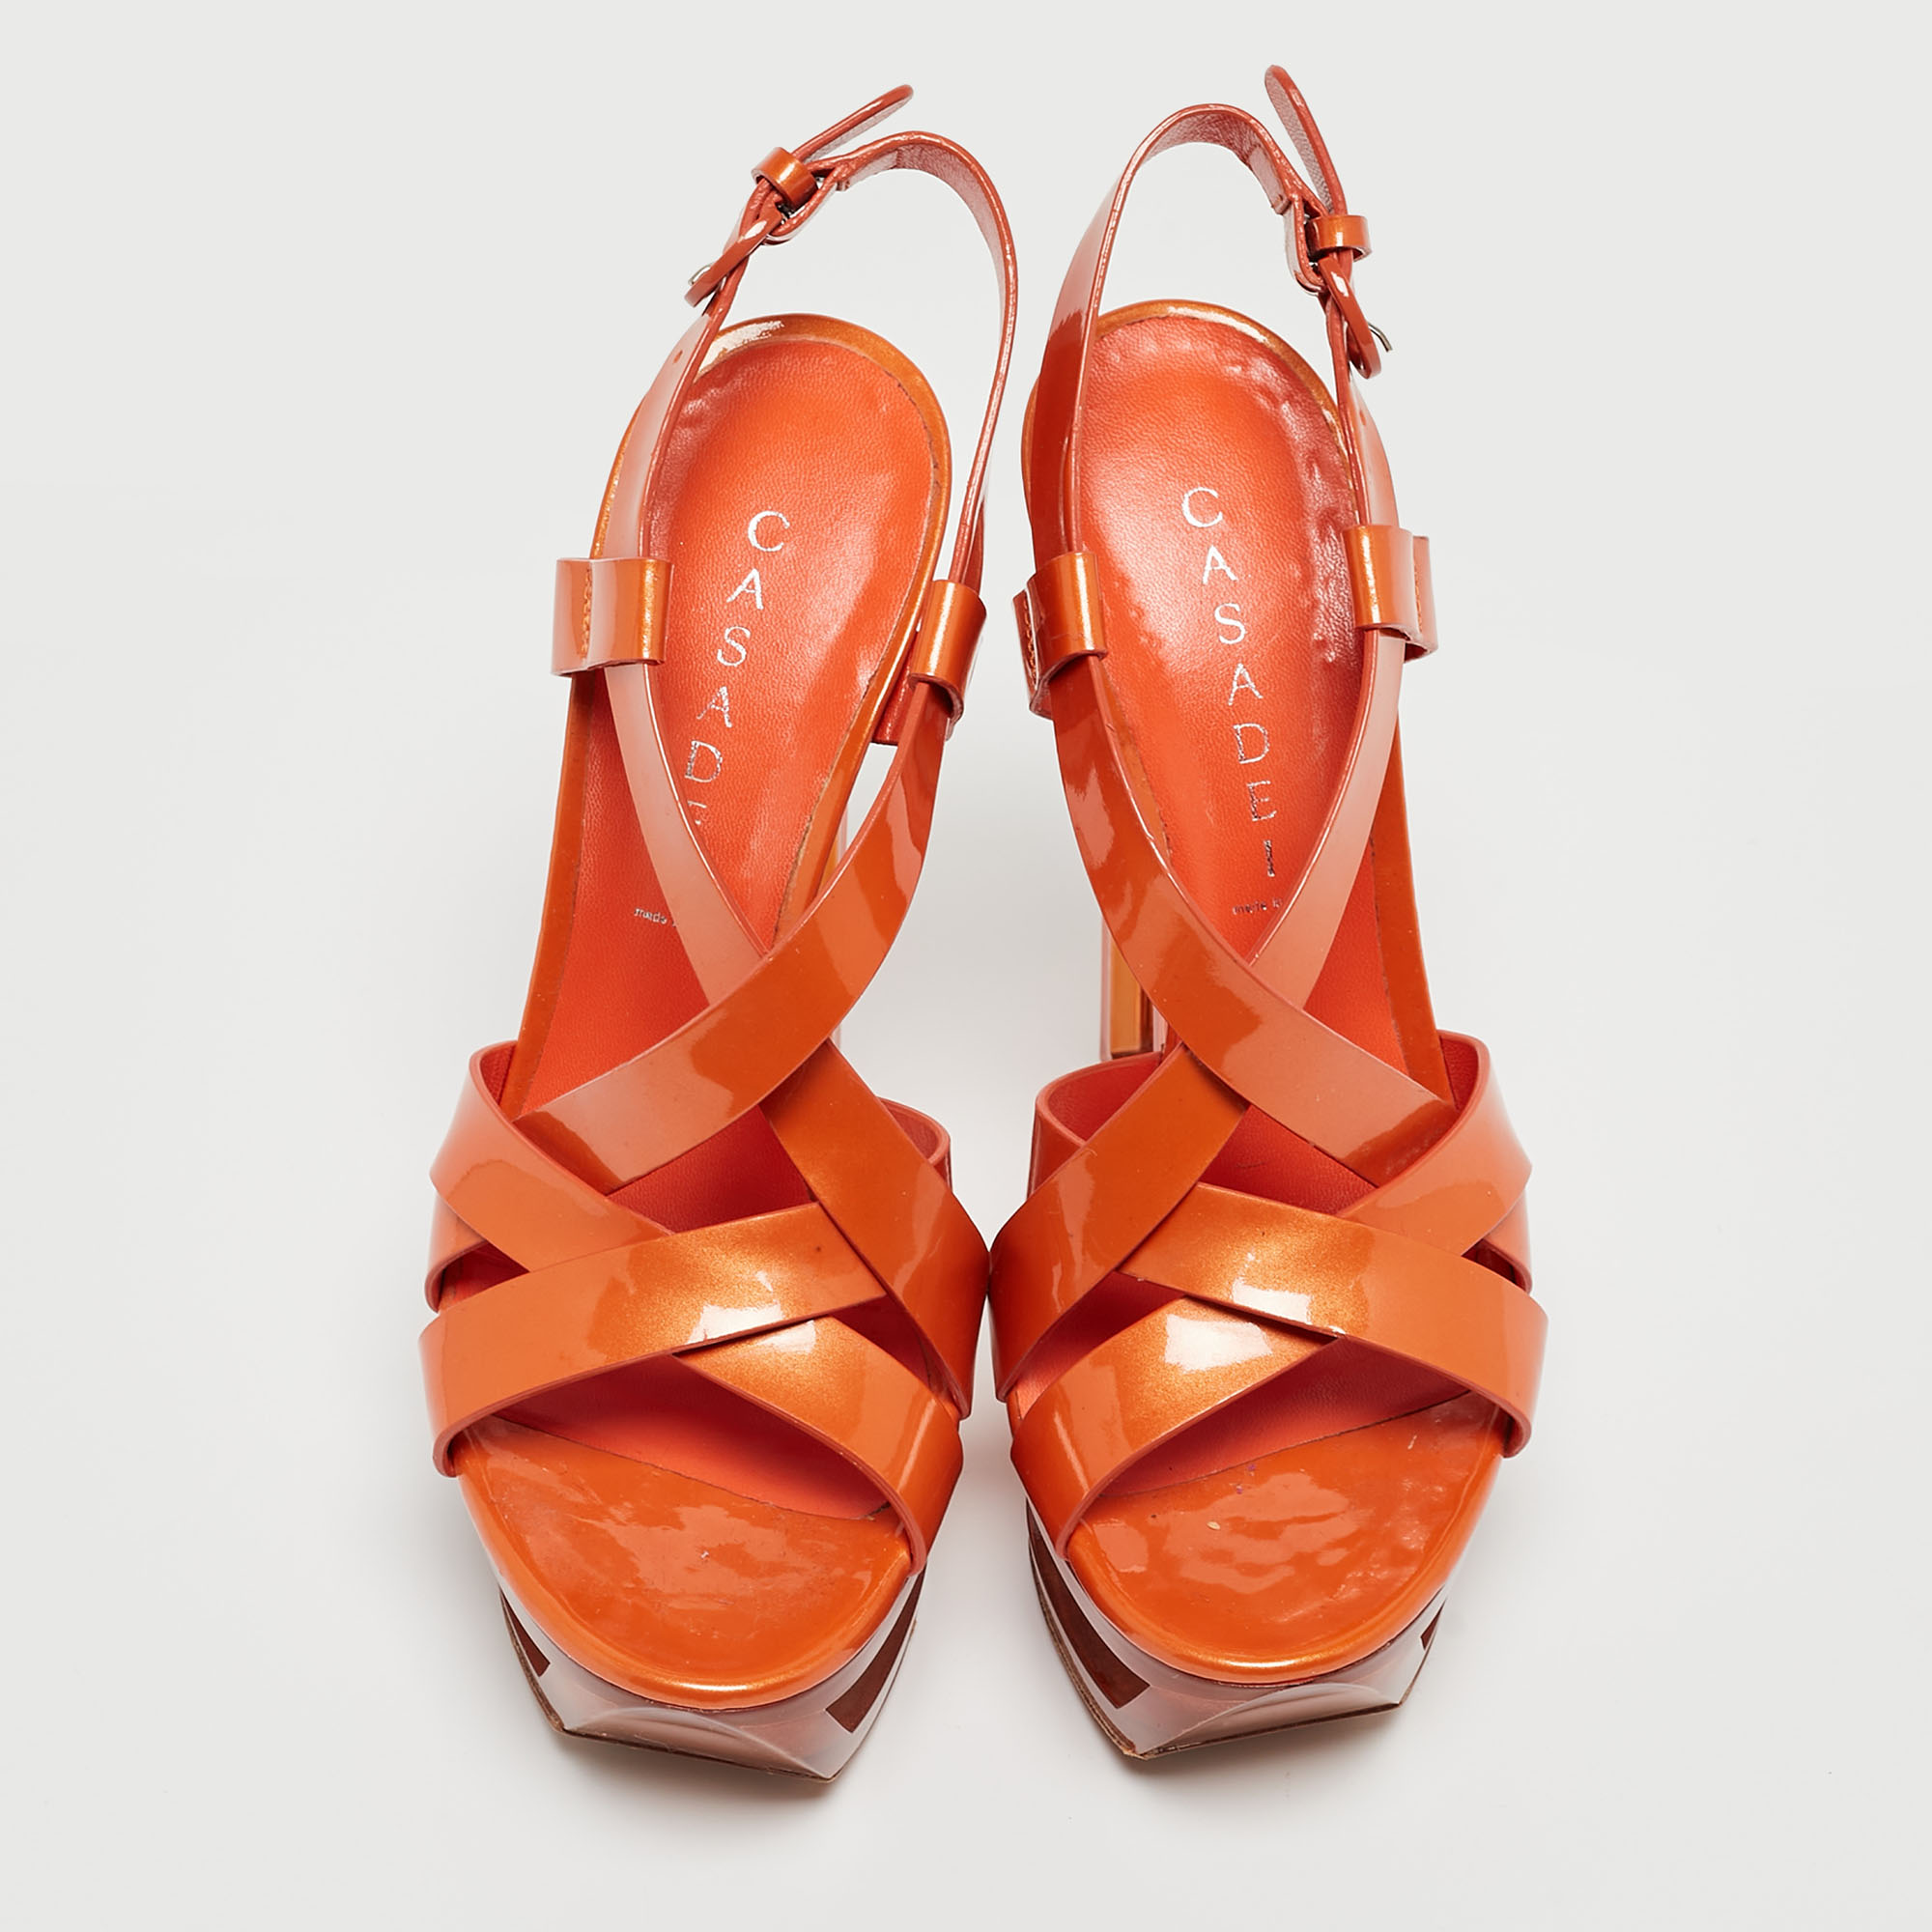 Casadei Orange Patent Leather Ankle Strap Sandals Size 38